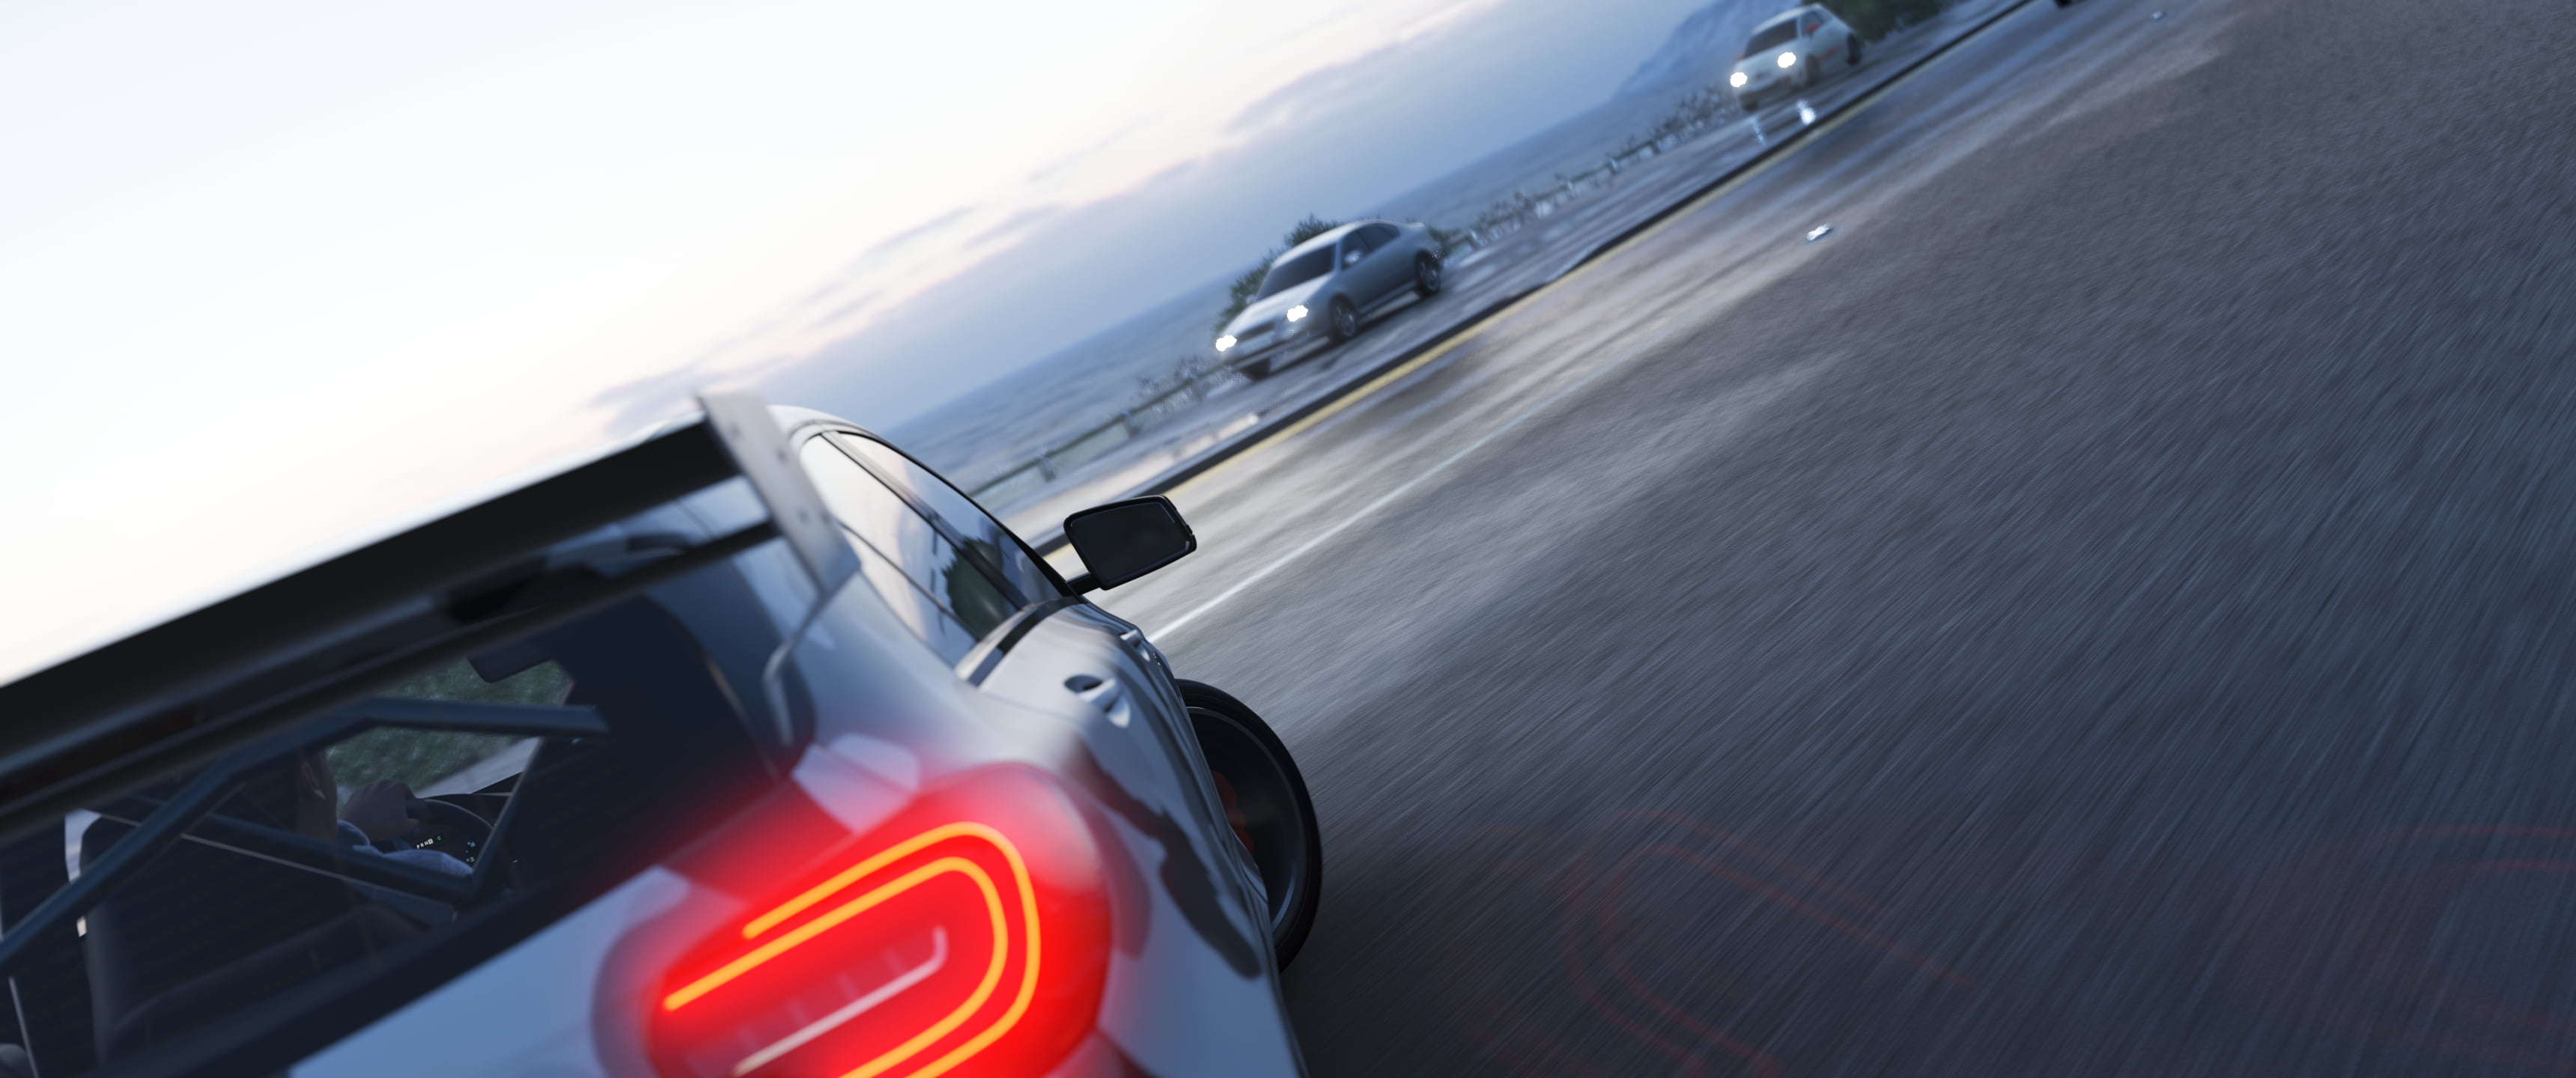 Forza Horizon 4, car, mercedes amg gt 63s, Mercedes C-25, Mustang (Car)